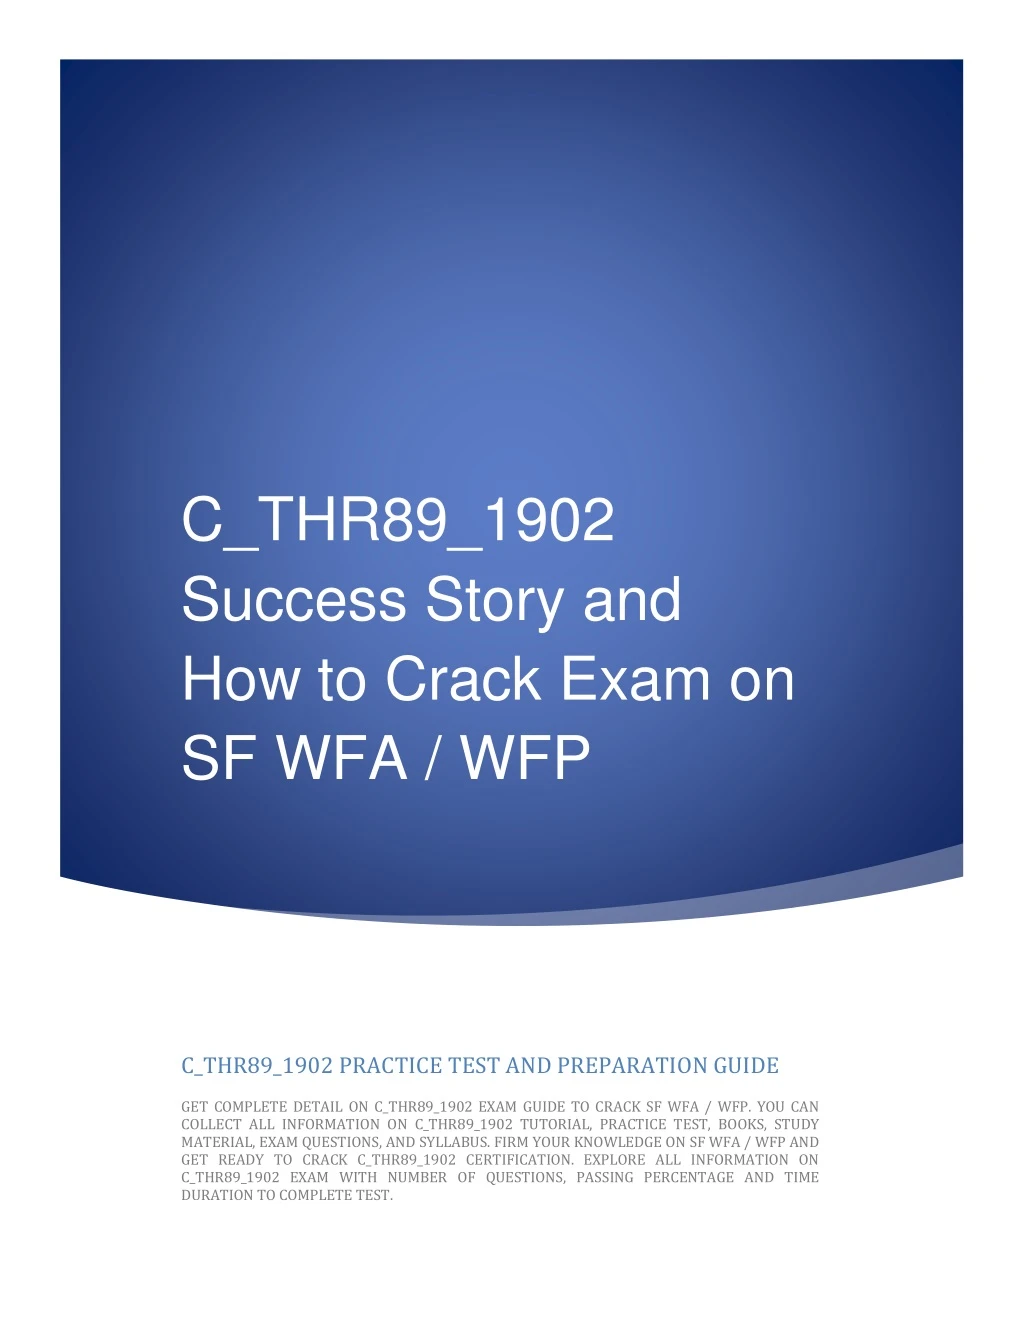 c thr89 1902 success story and how to crack exam